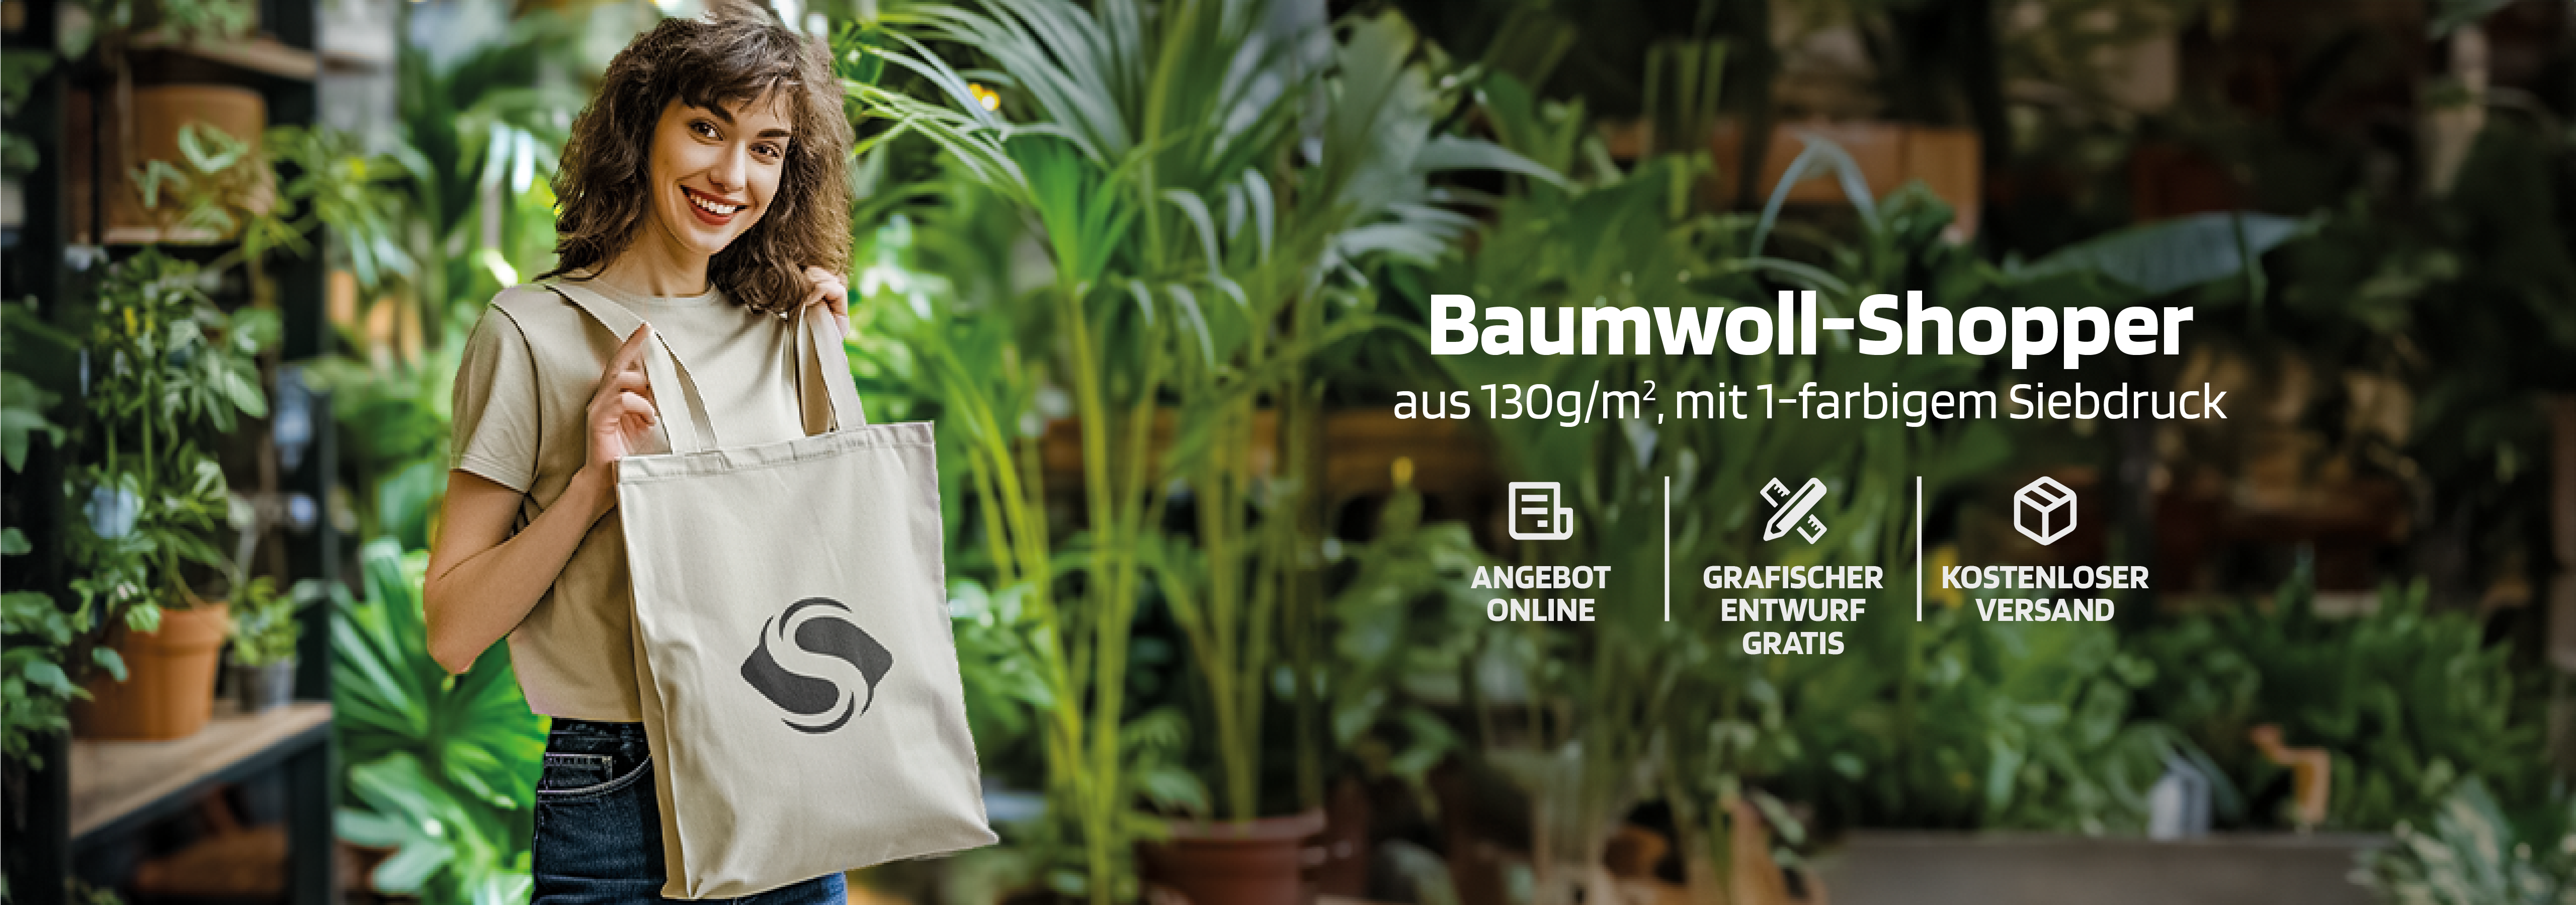 Baumwoll-Shopper